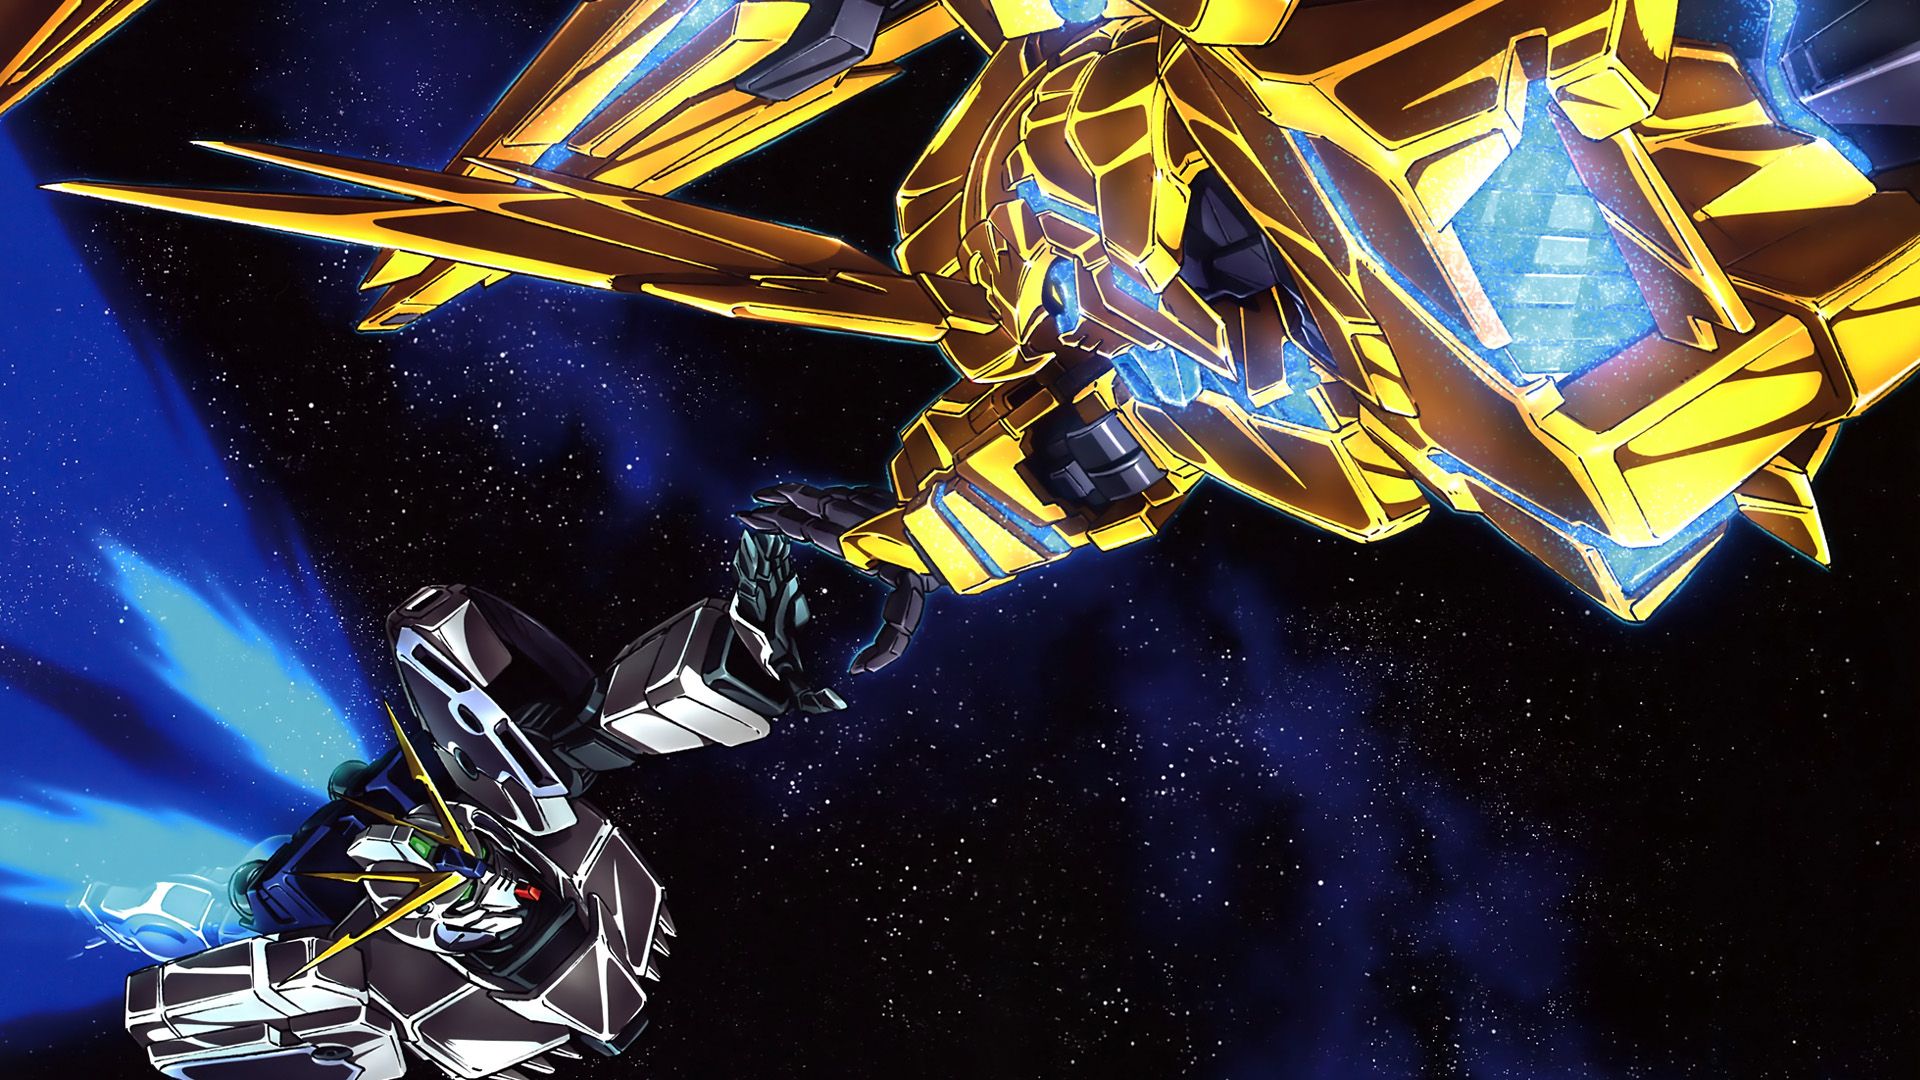 Mobile Suit Gundam: NT - Narrative background